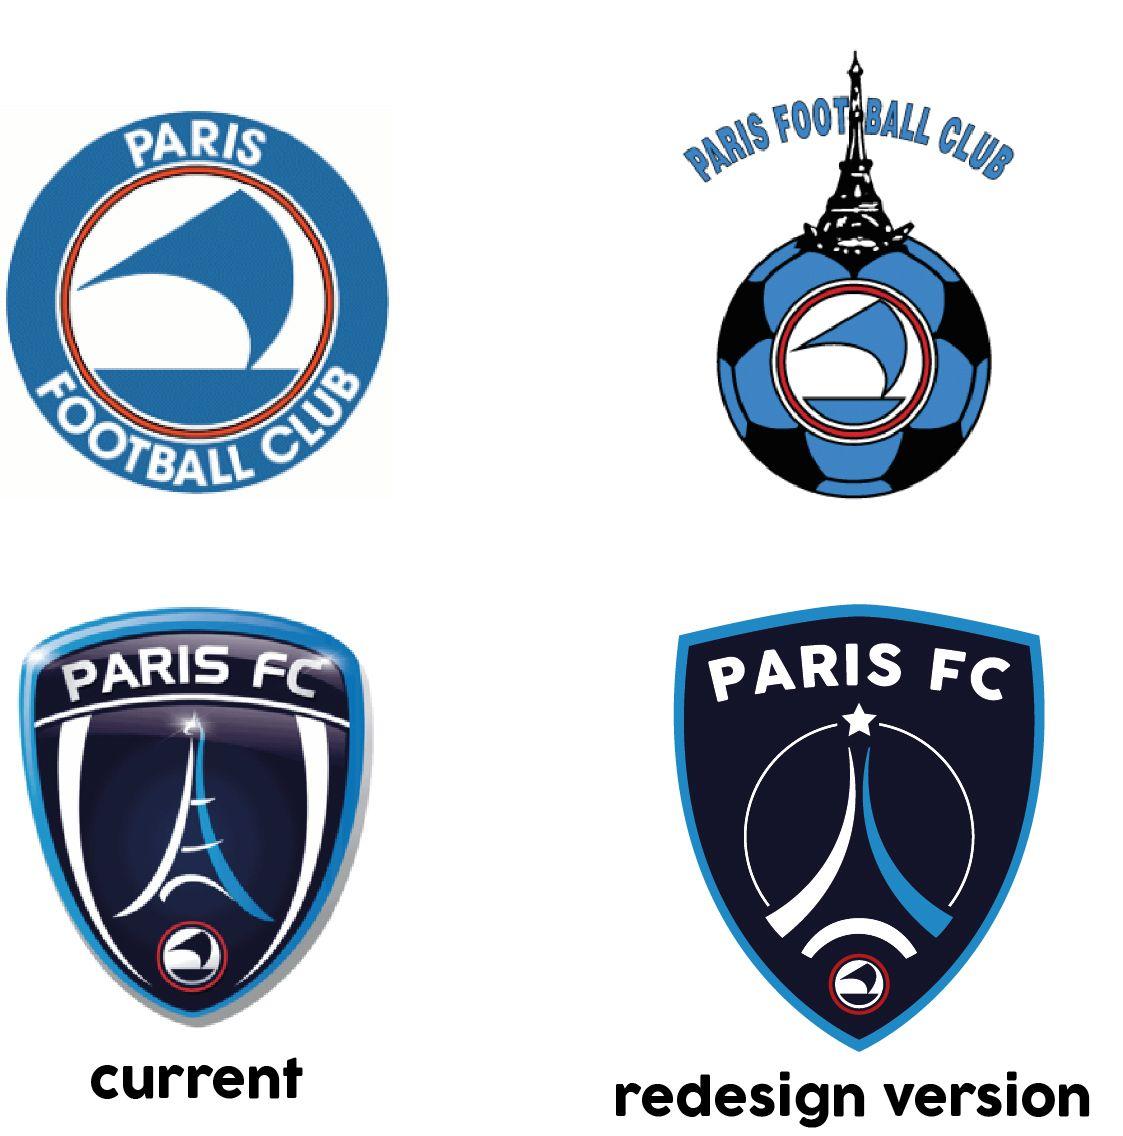 Paris FC Logo - Paris Fc Logo Redesign. on Behance